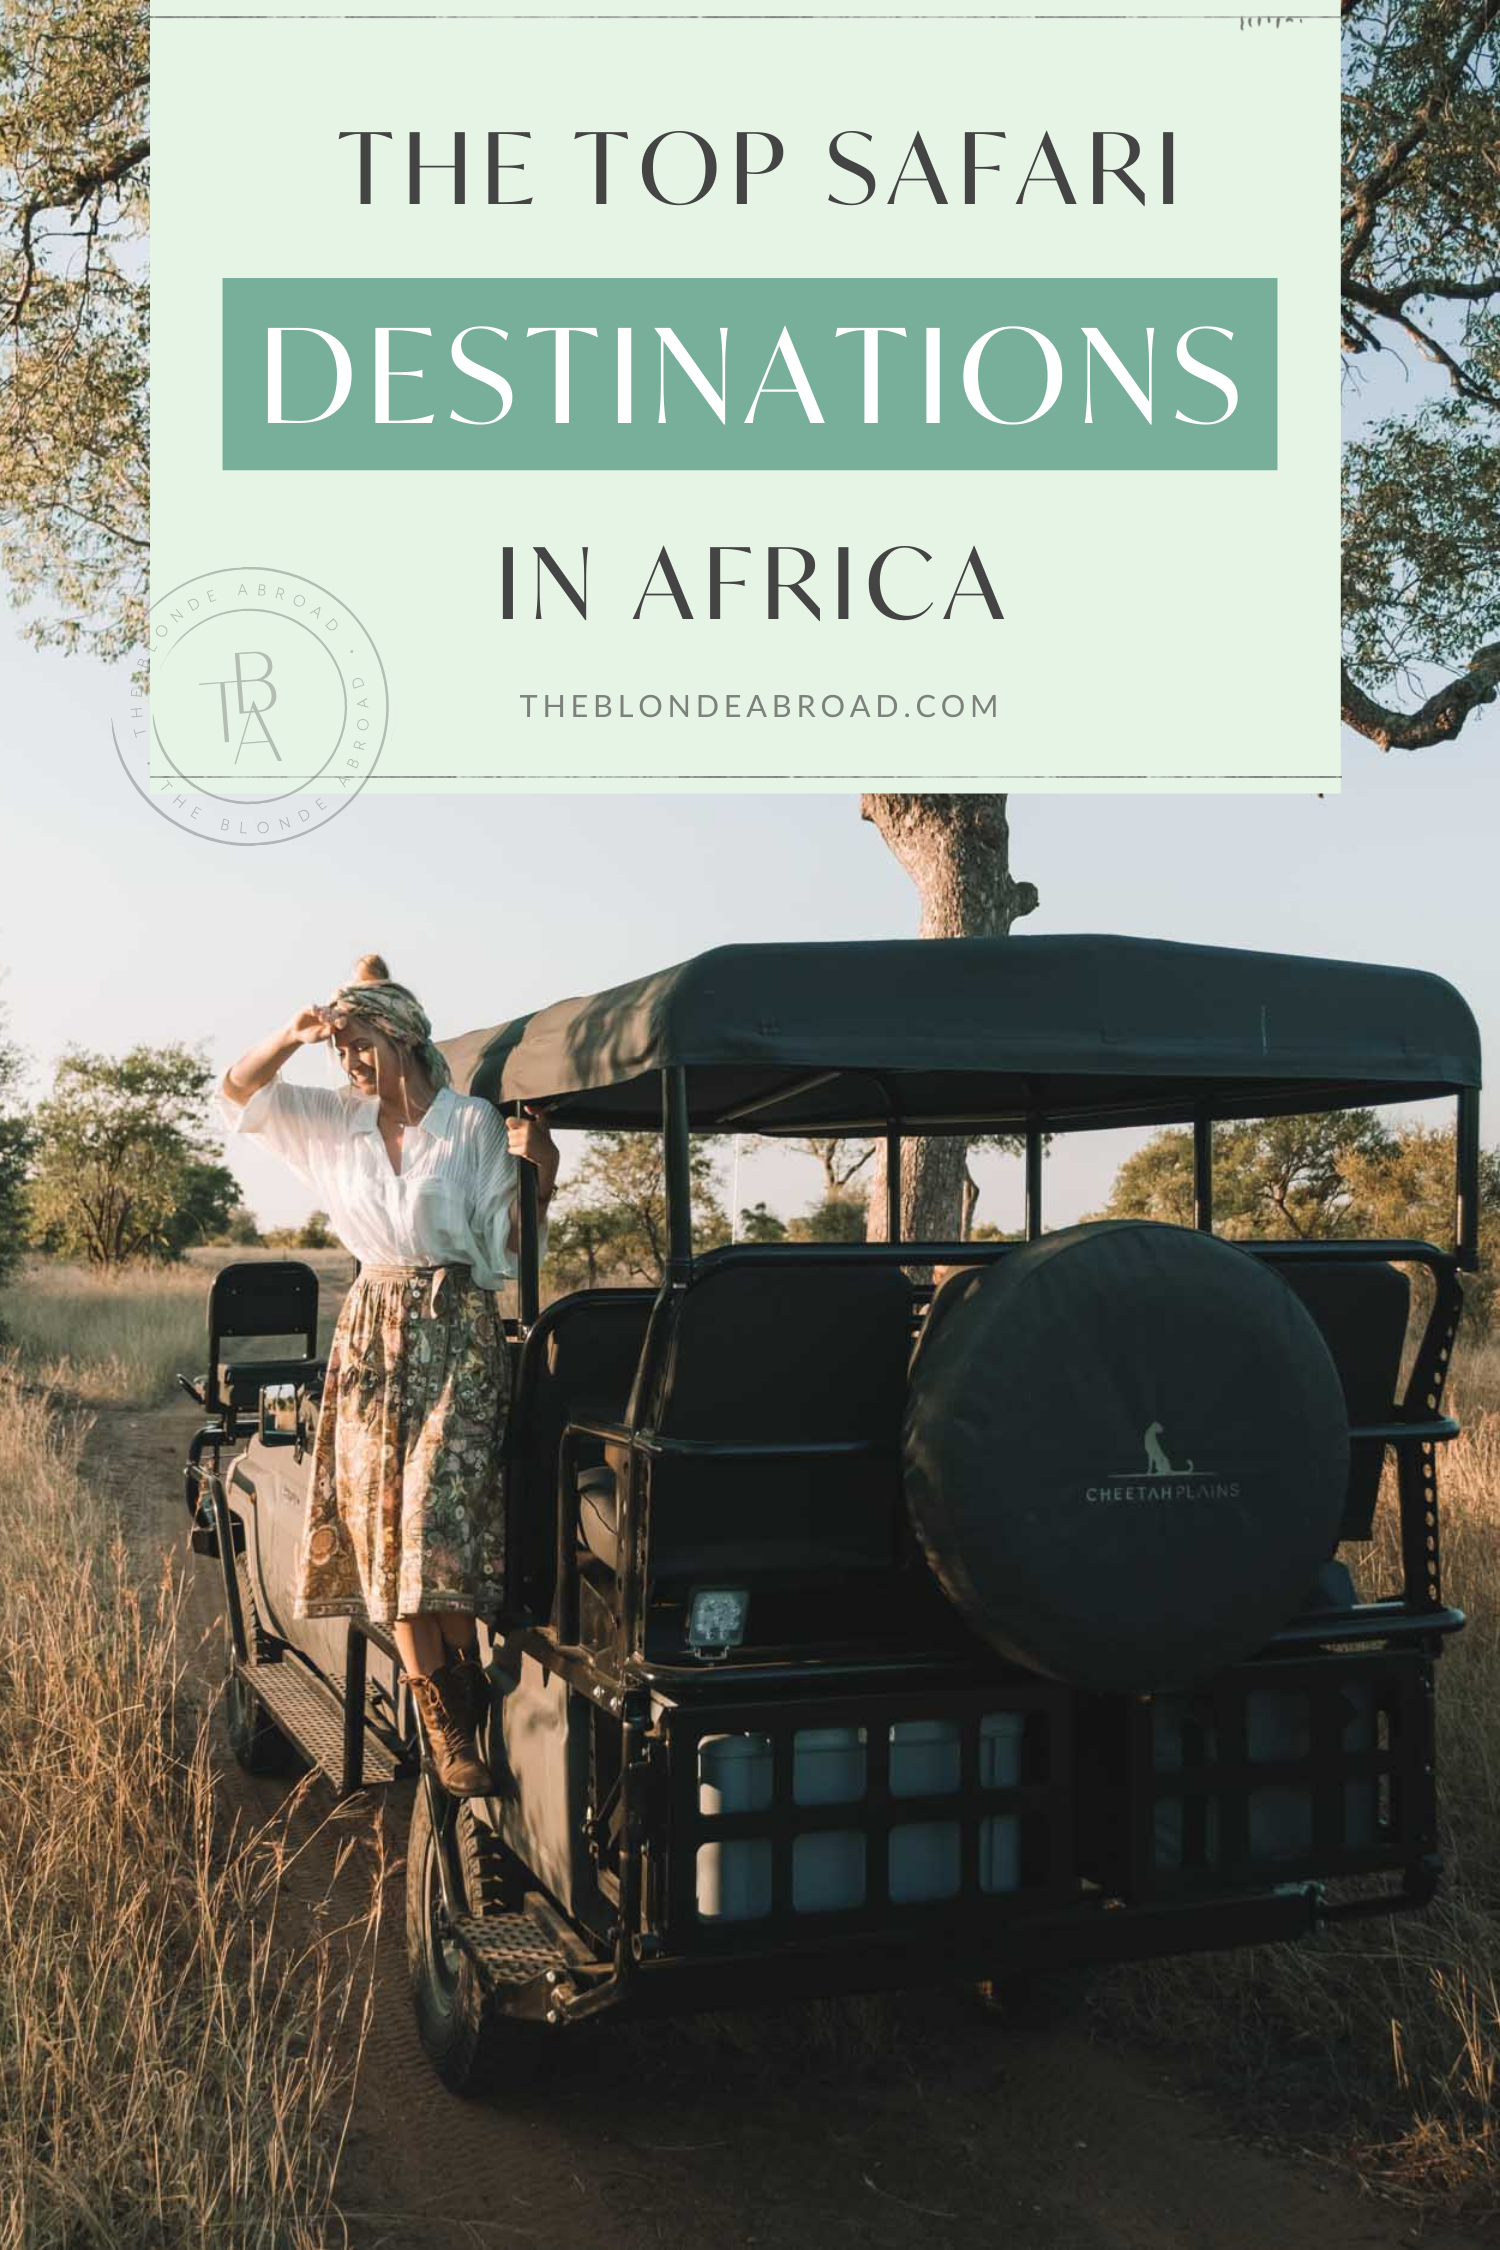 The Top Safari Destinations in Africa